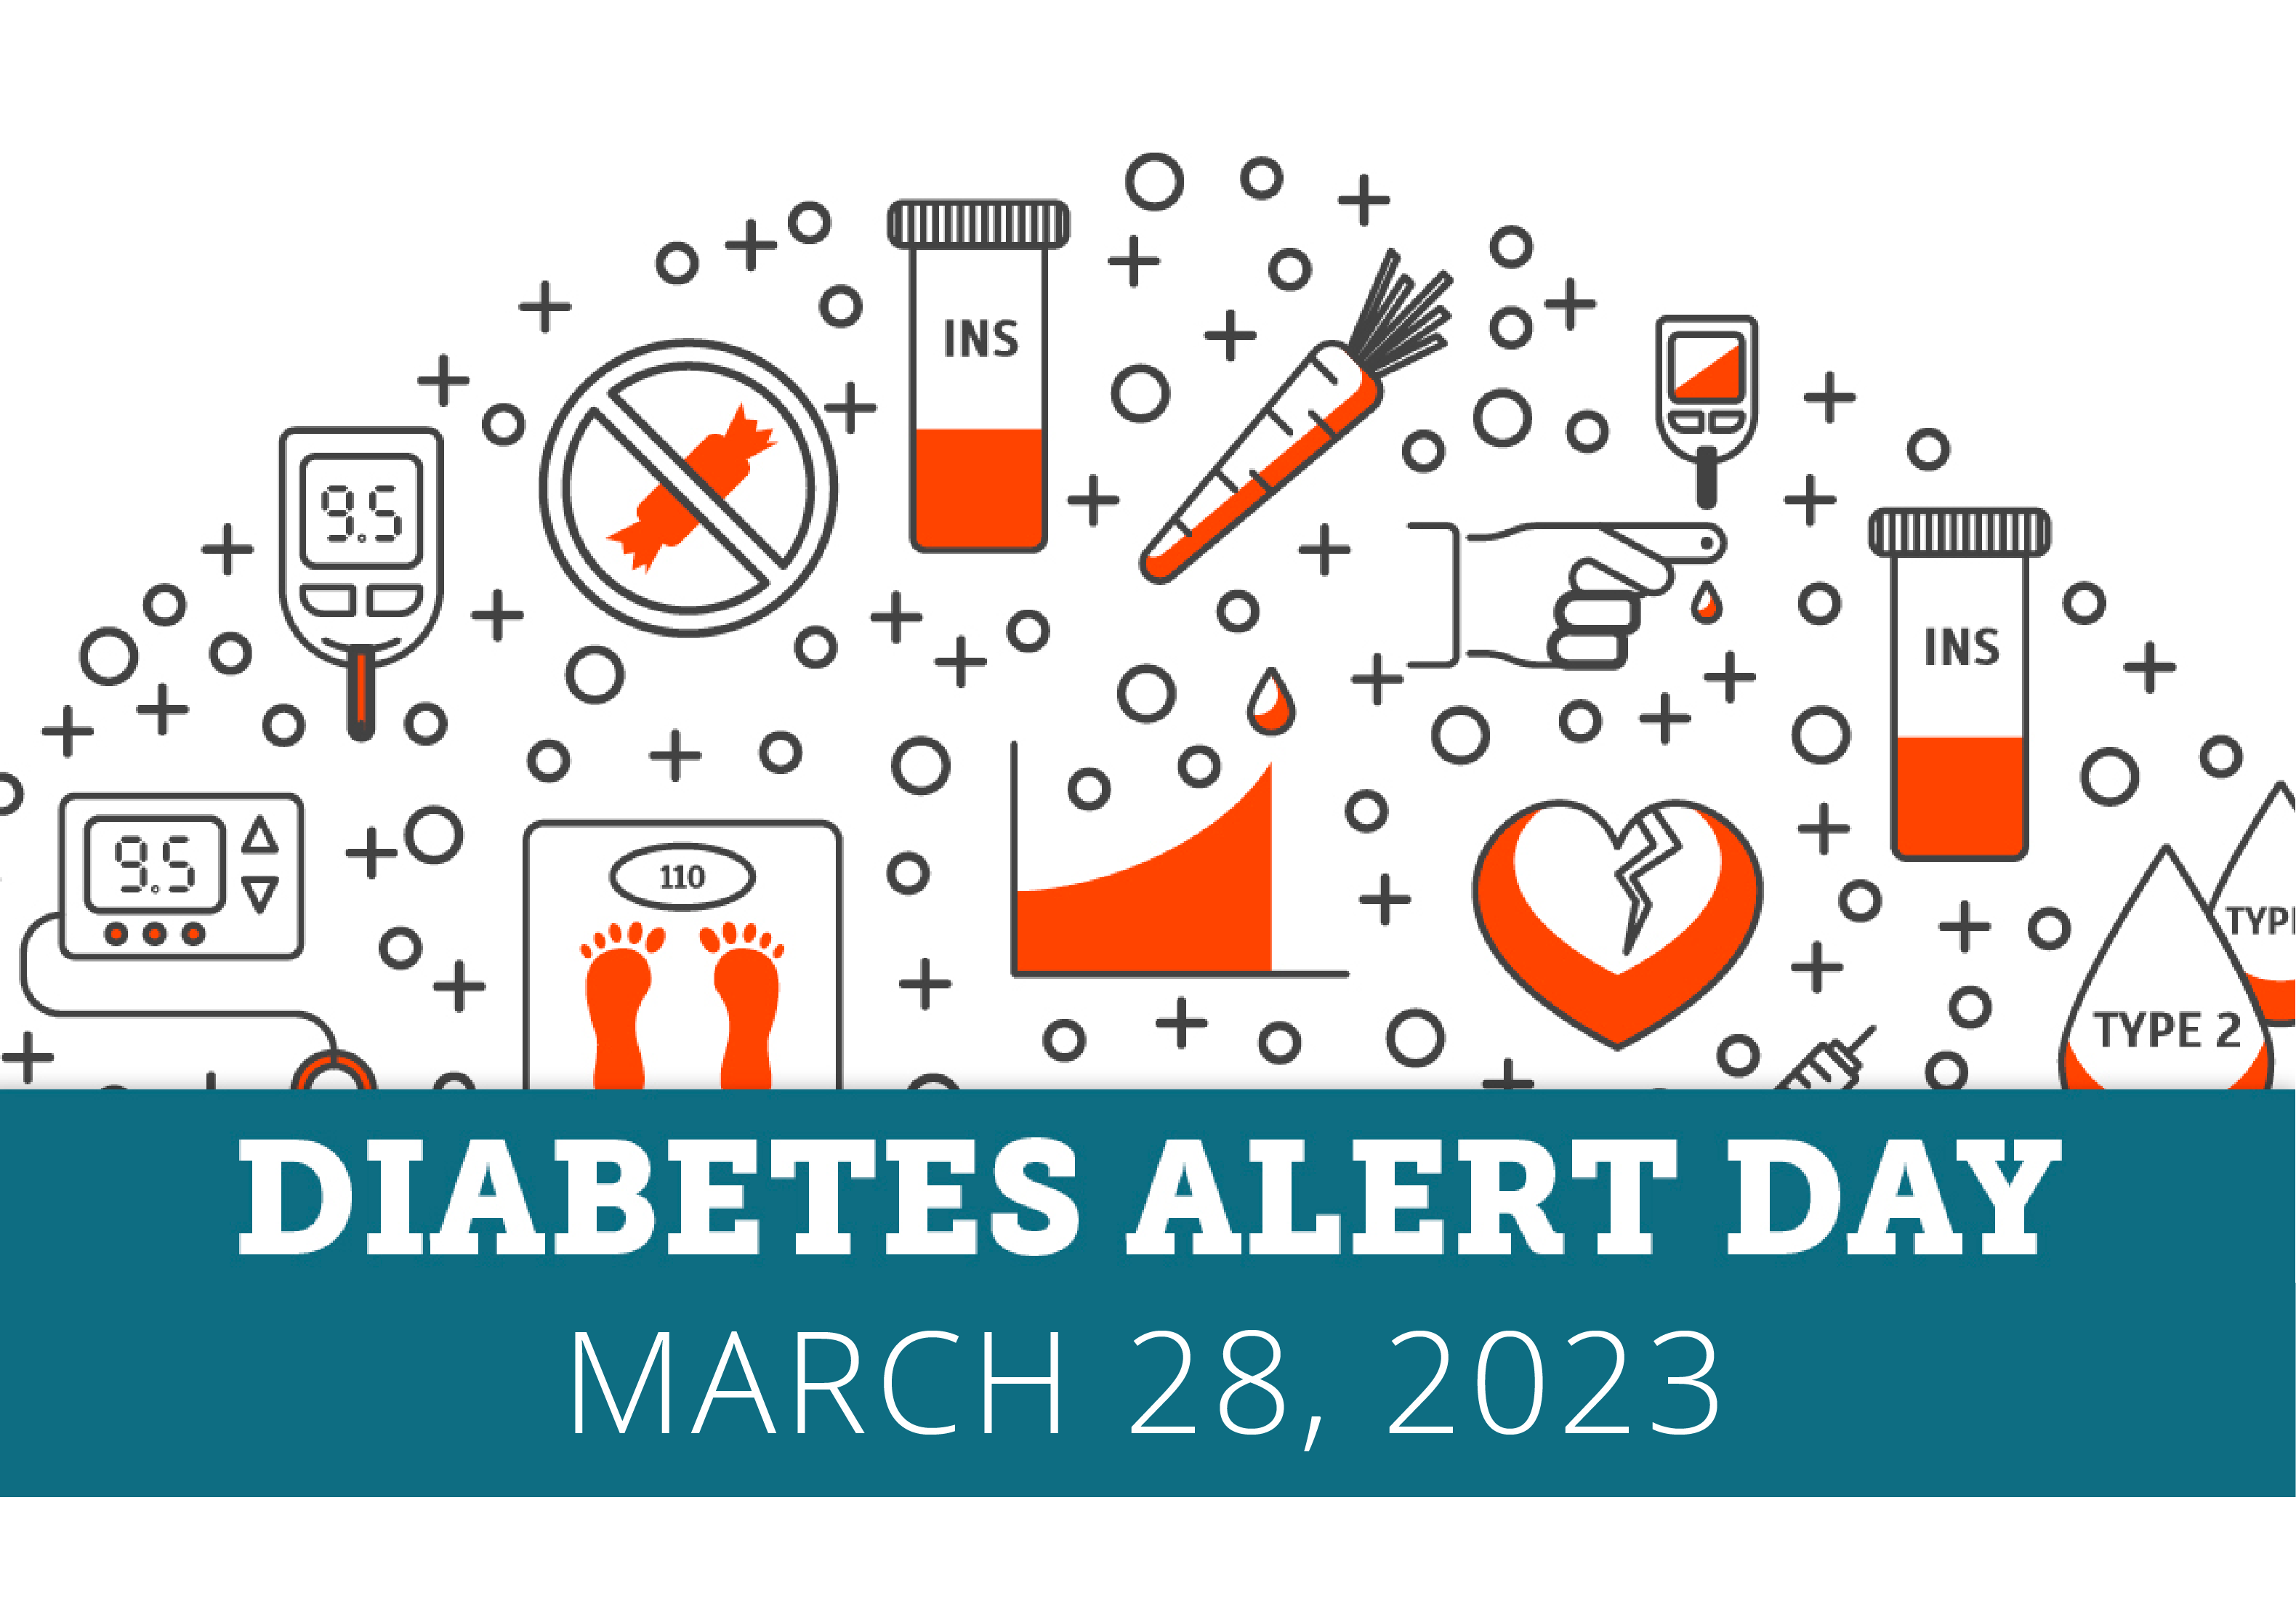 Diabetes Alert Day March 28, 2023